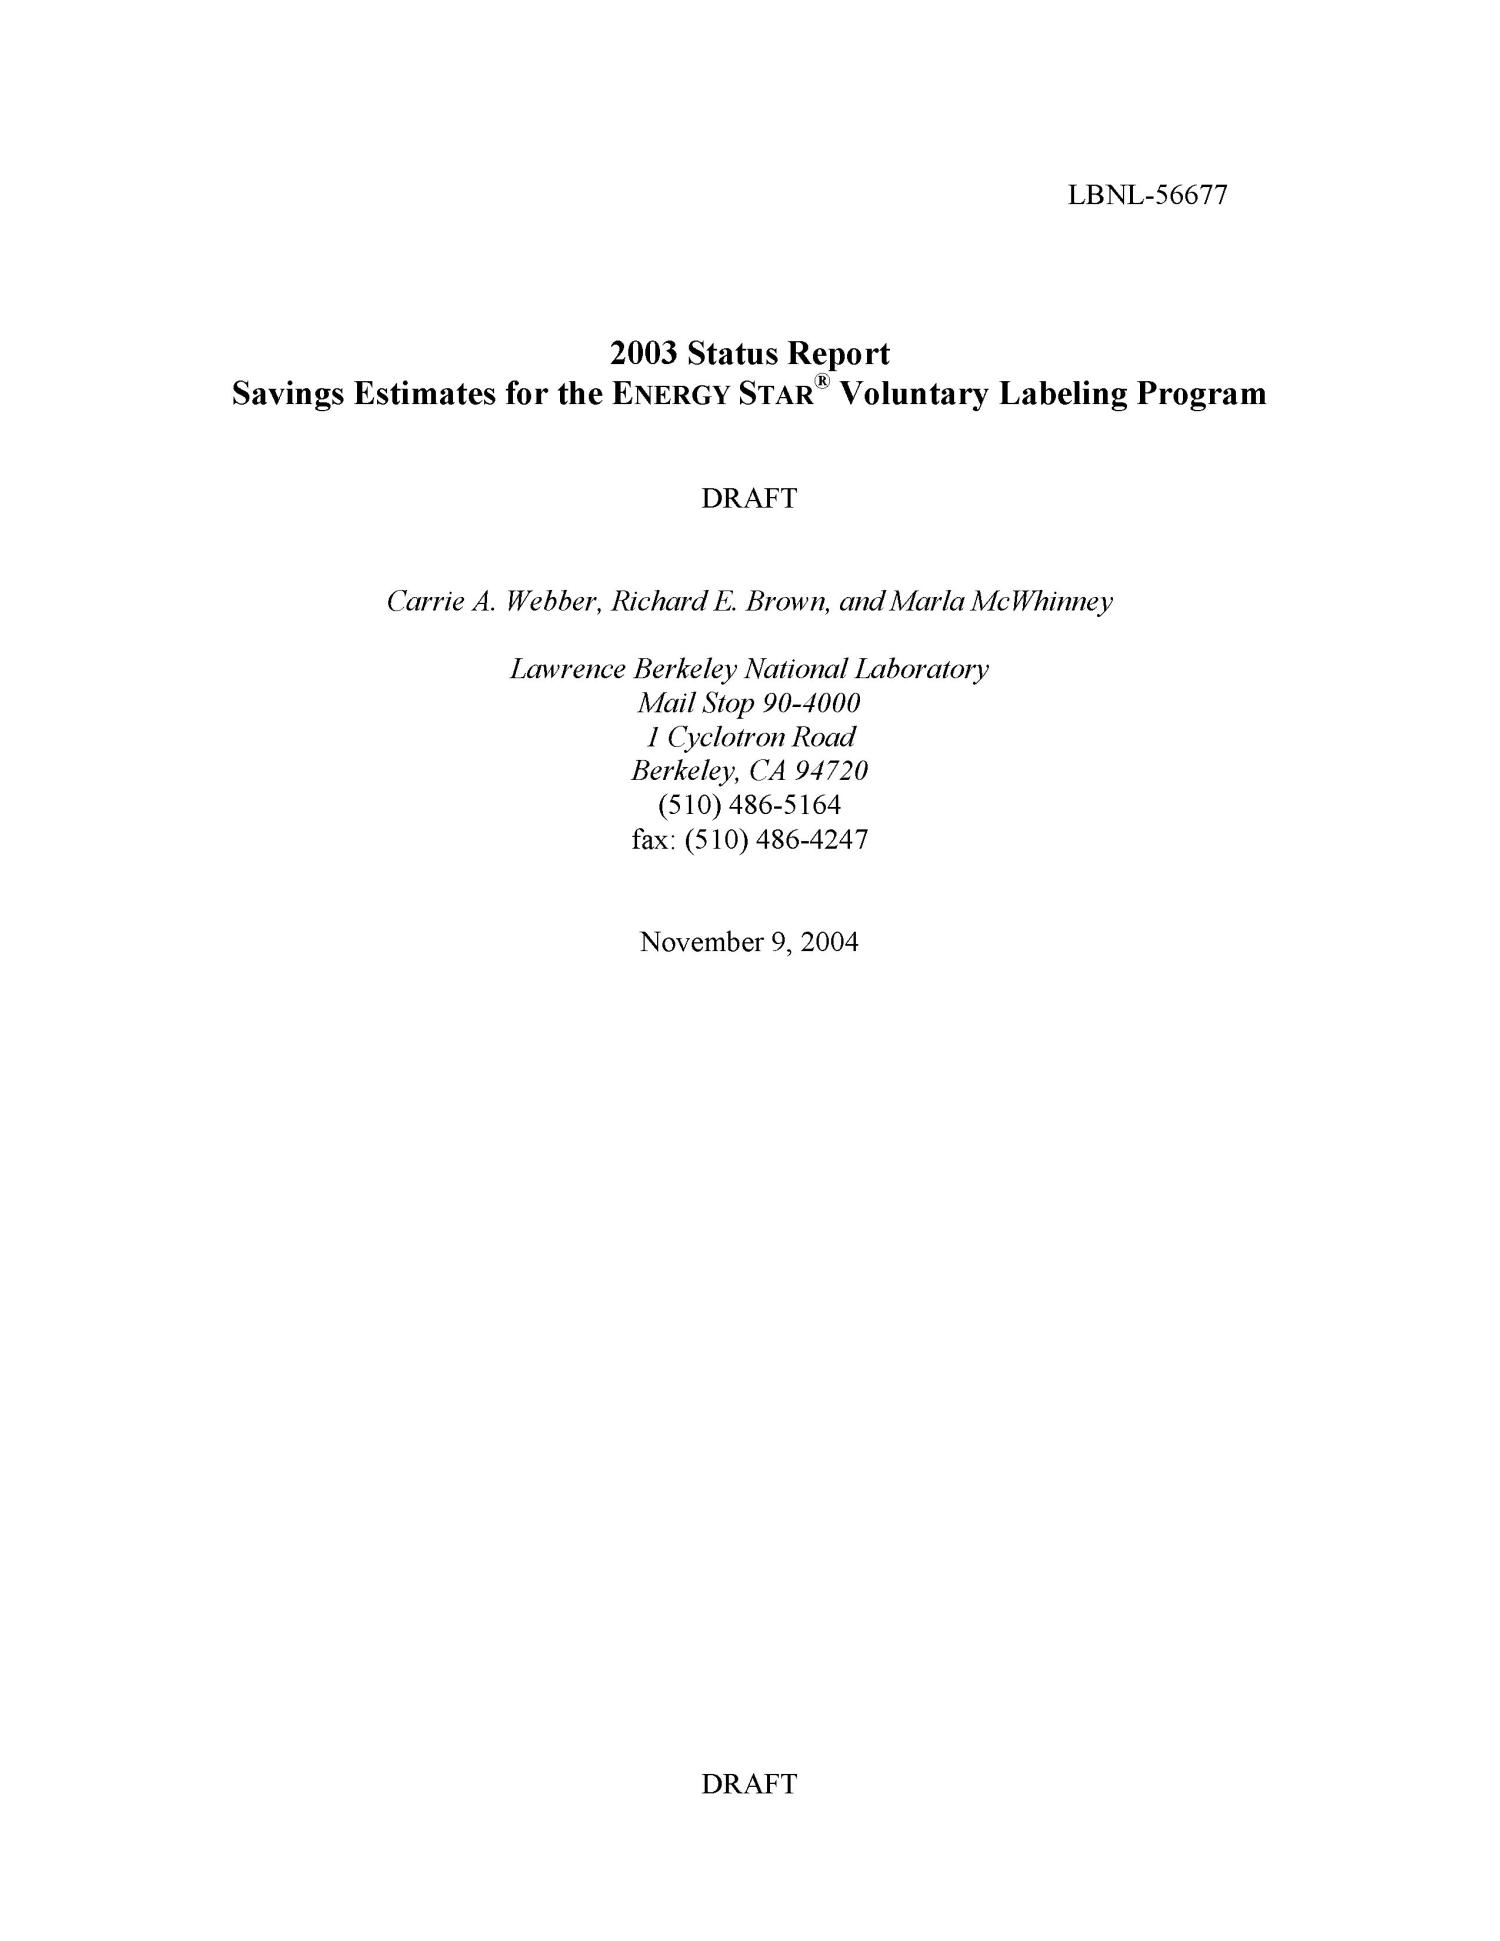 2003-status-report-savings-estimates-for-the-energy-star-r-voluntary